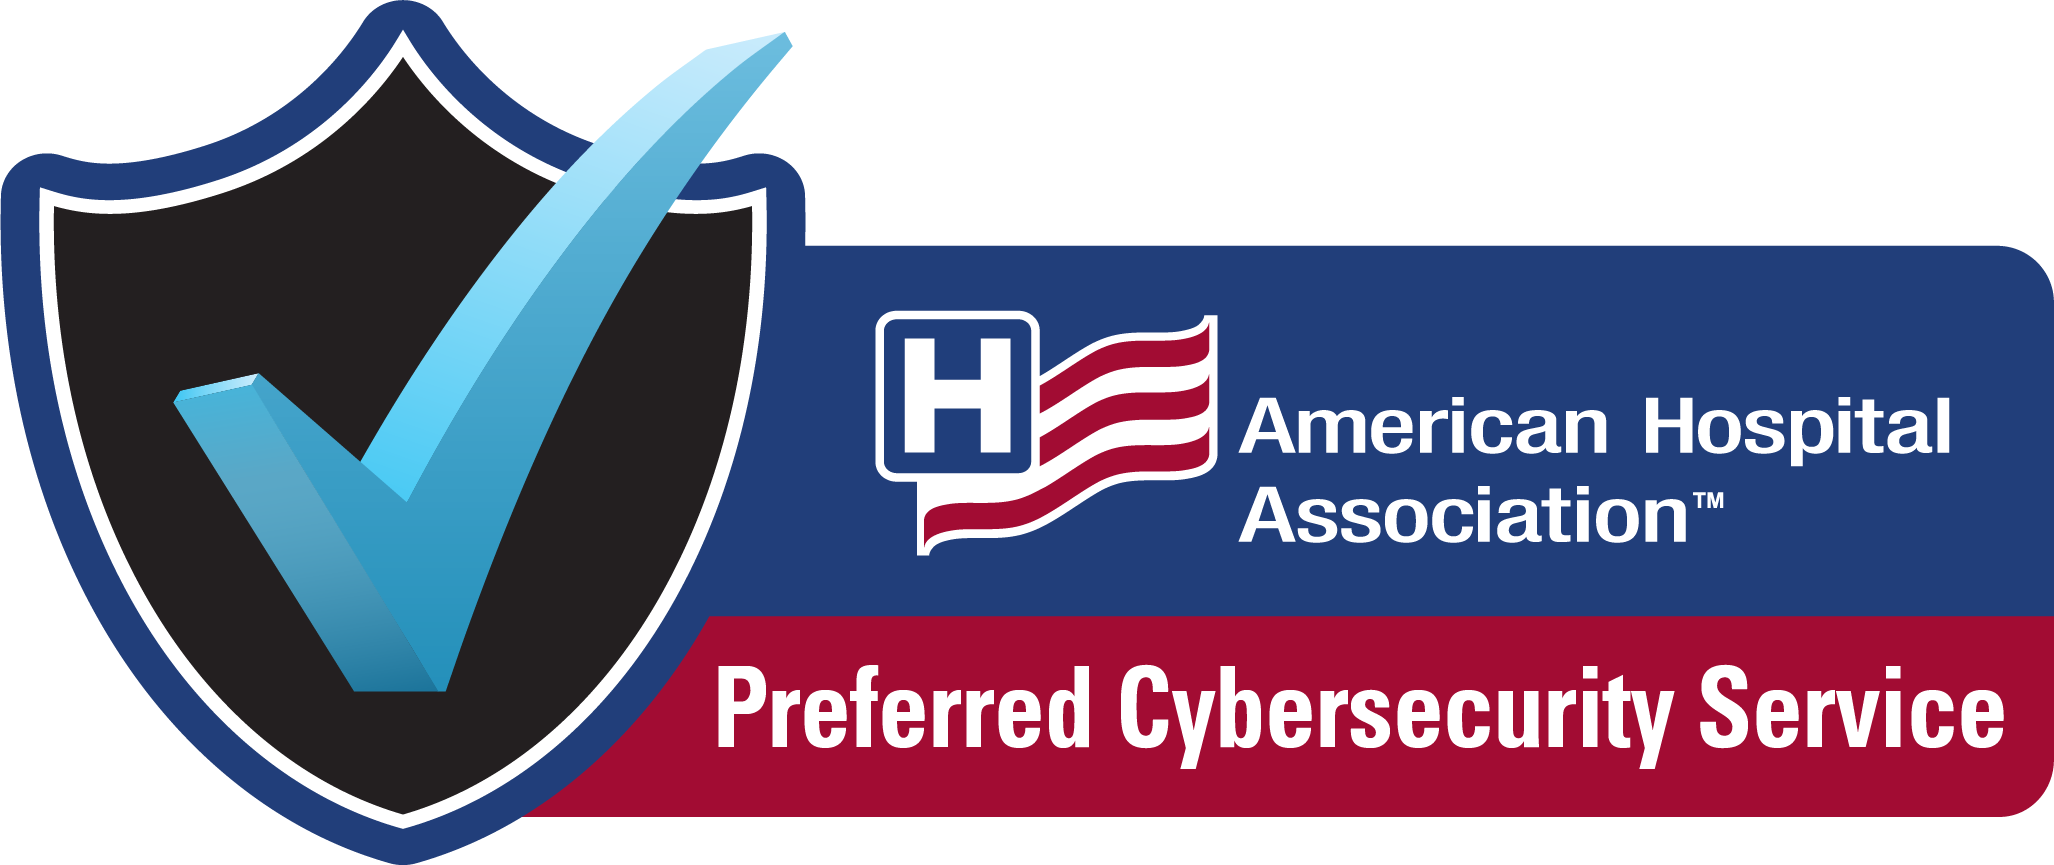 American Hospital Association - Preferred Cybersecurity Service